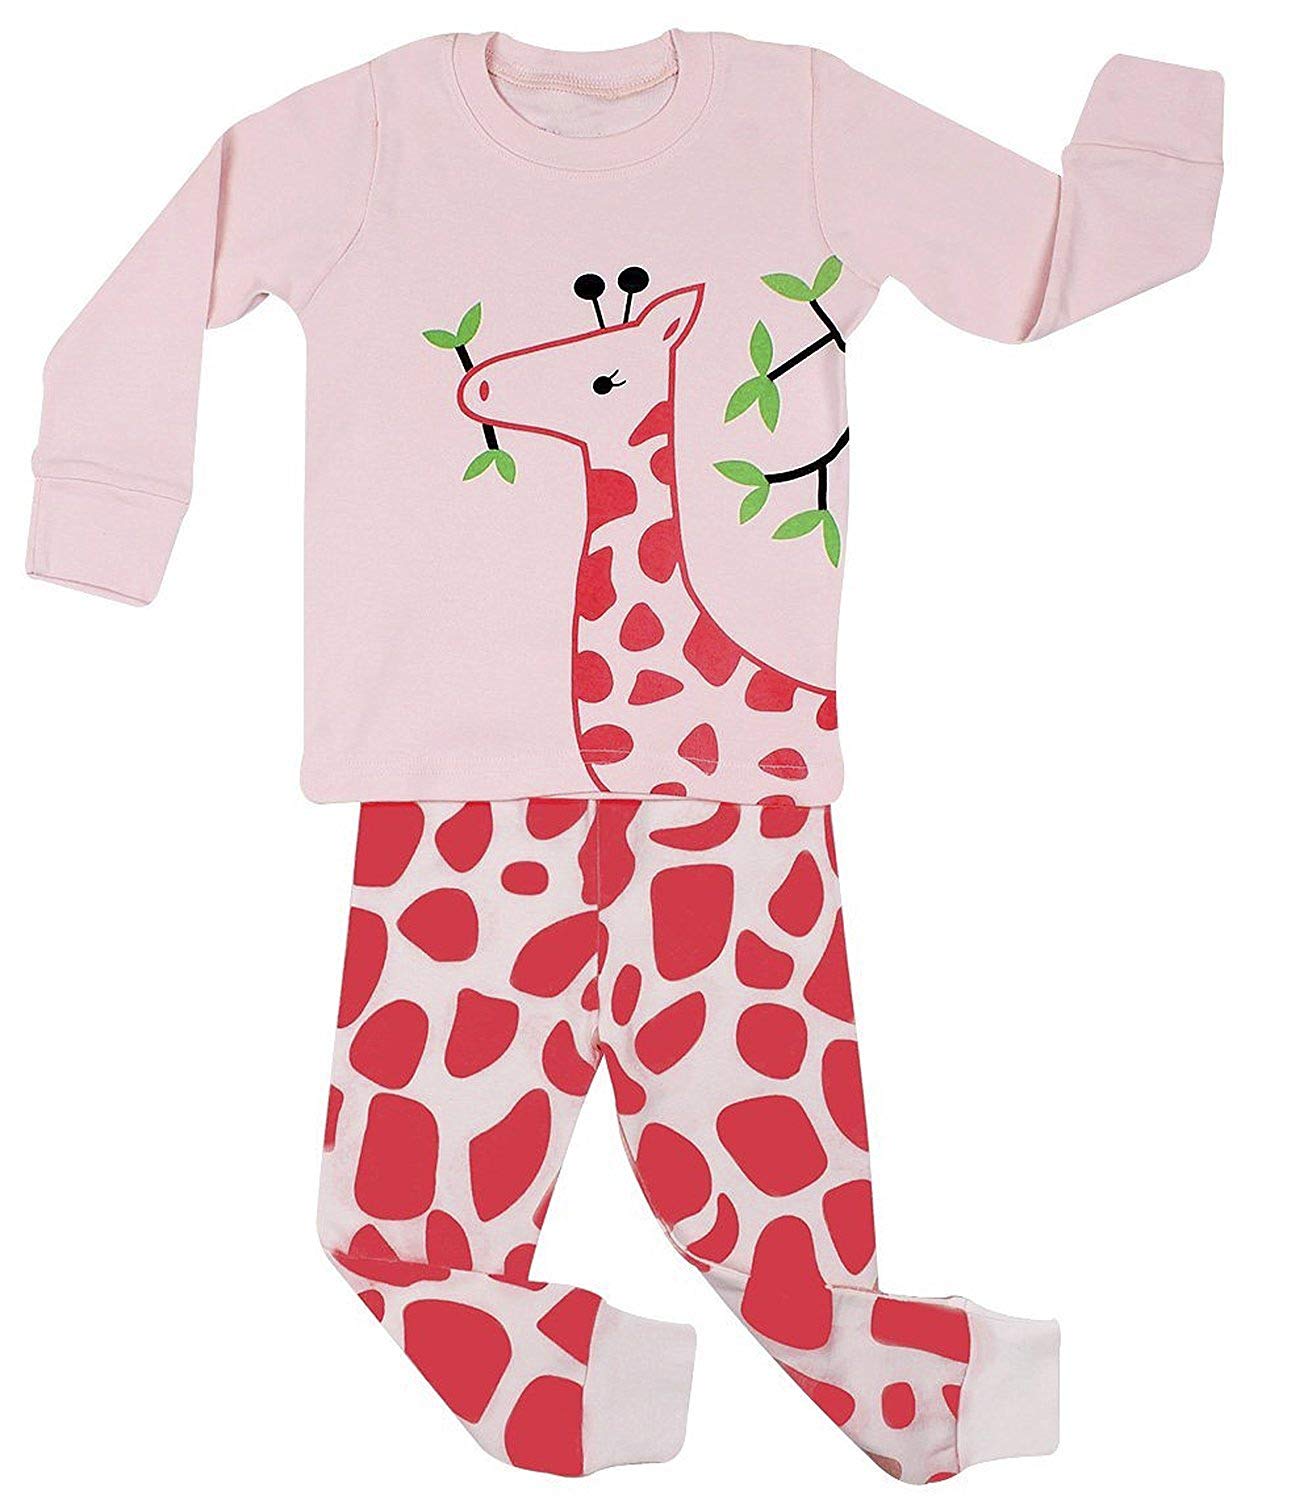 Kid Sleepwear Girls' Giraffe Long Sleeve Pyjamas Set Size 11 12 